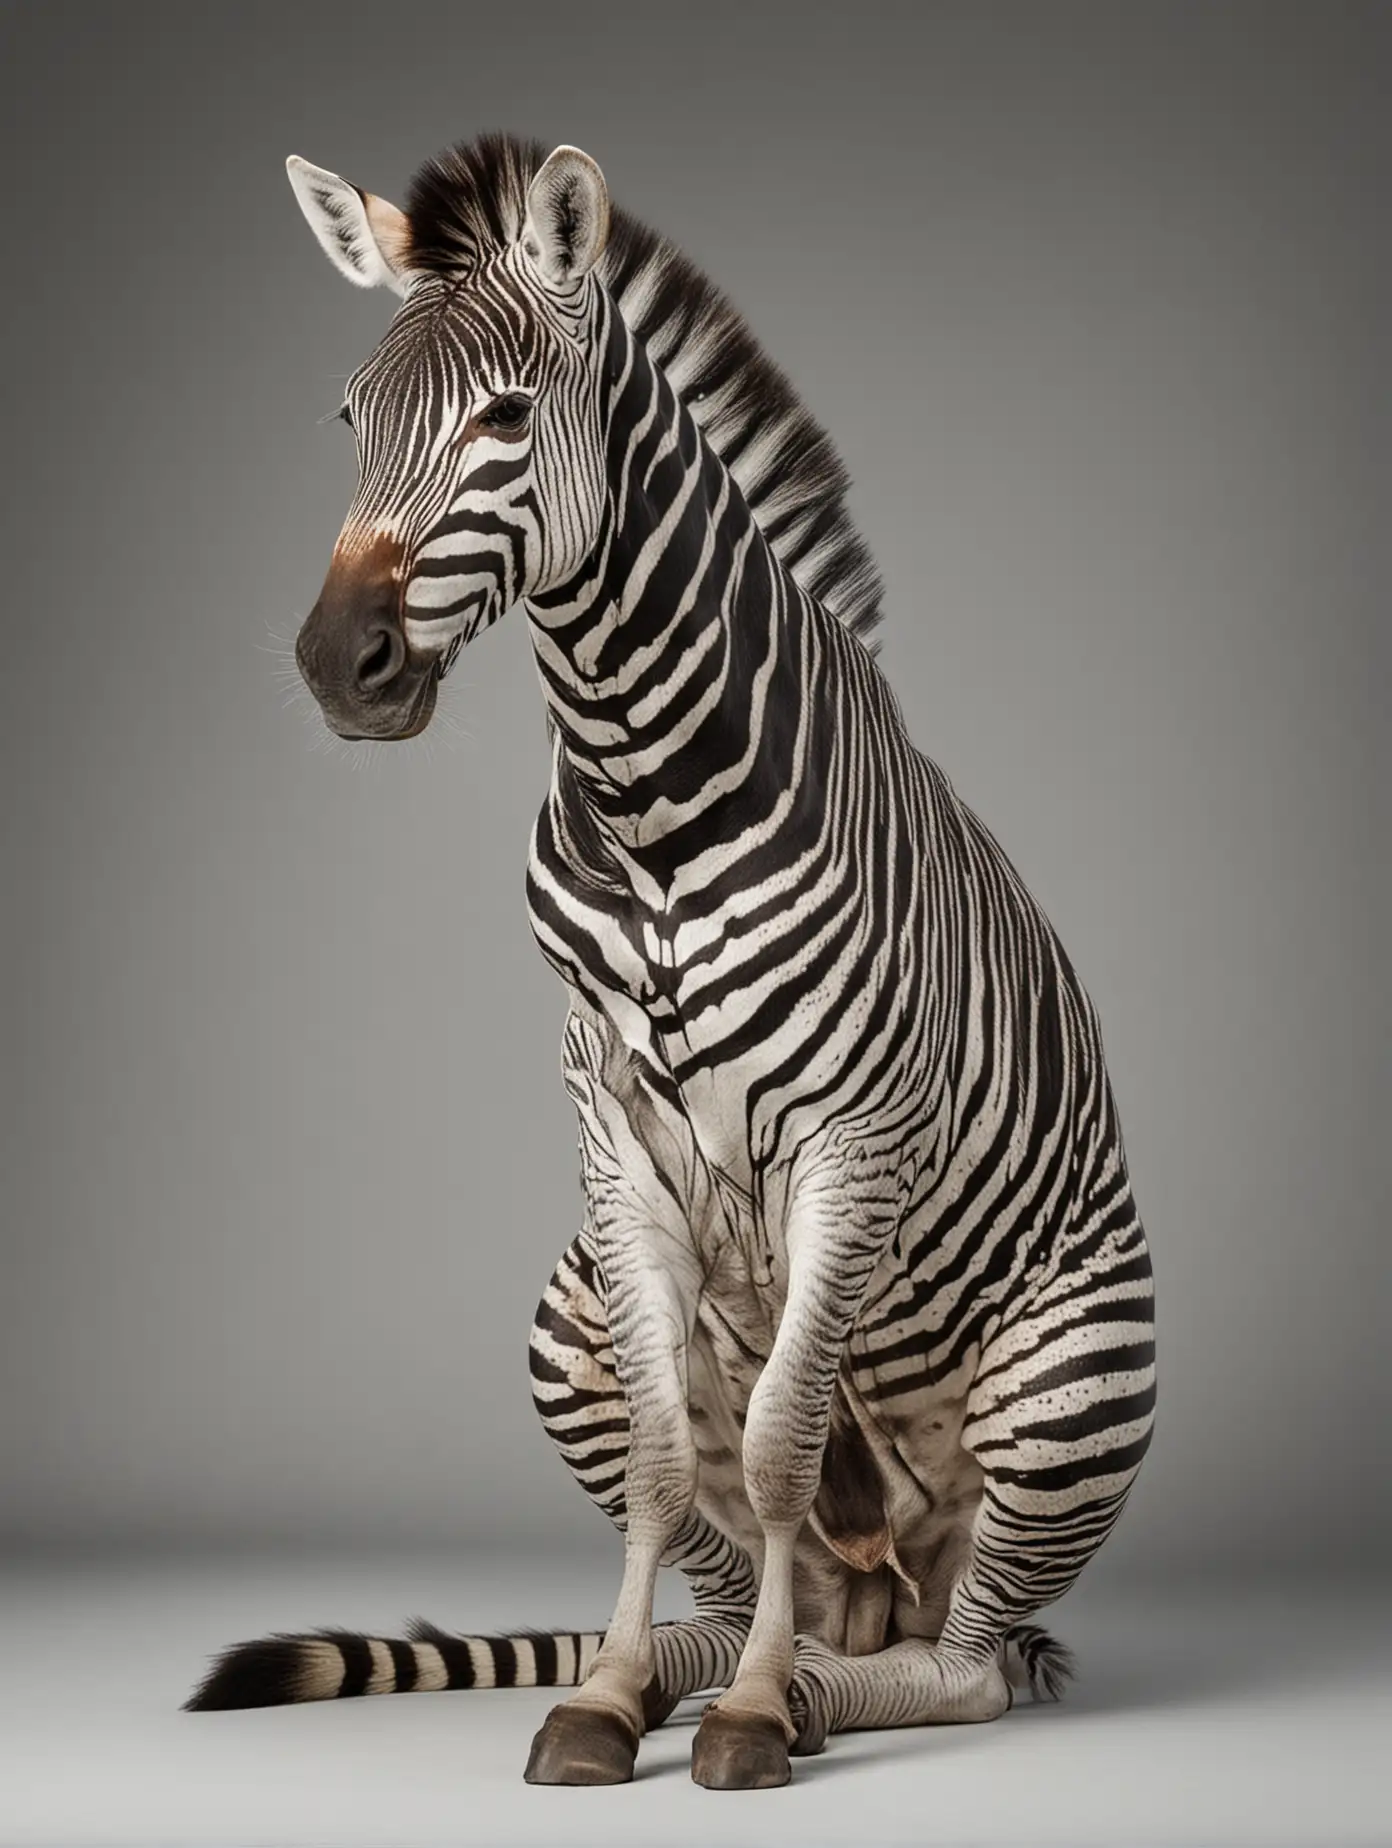 Full body studio photo of zebra sitting, angled view